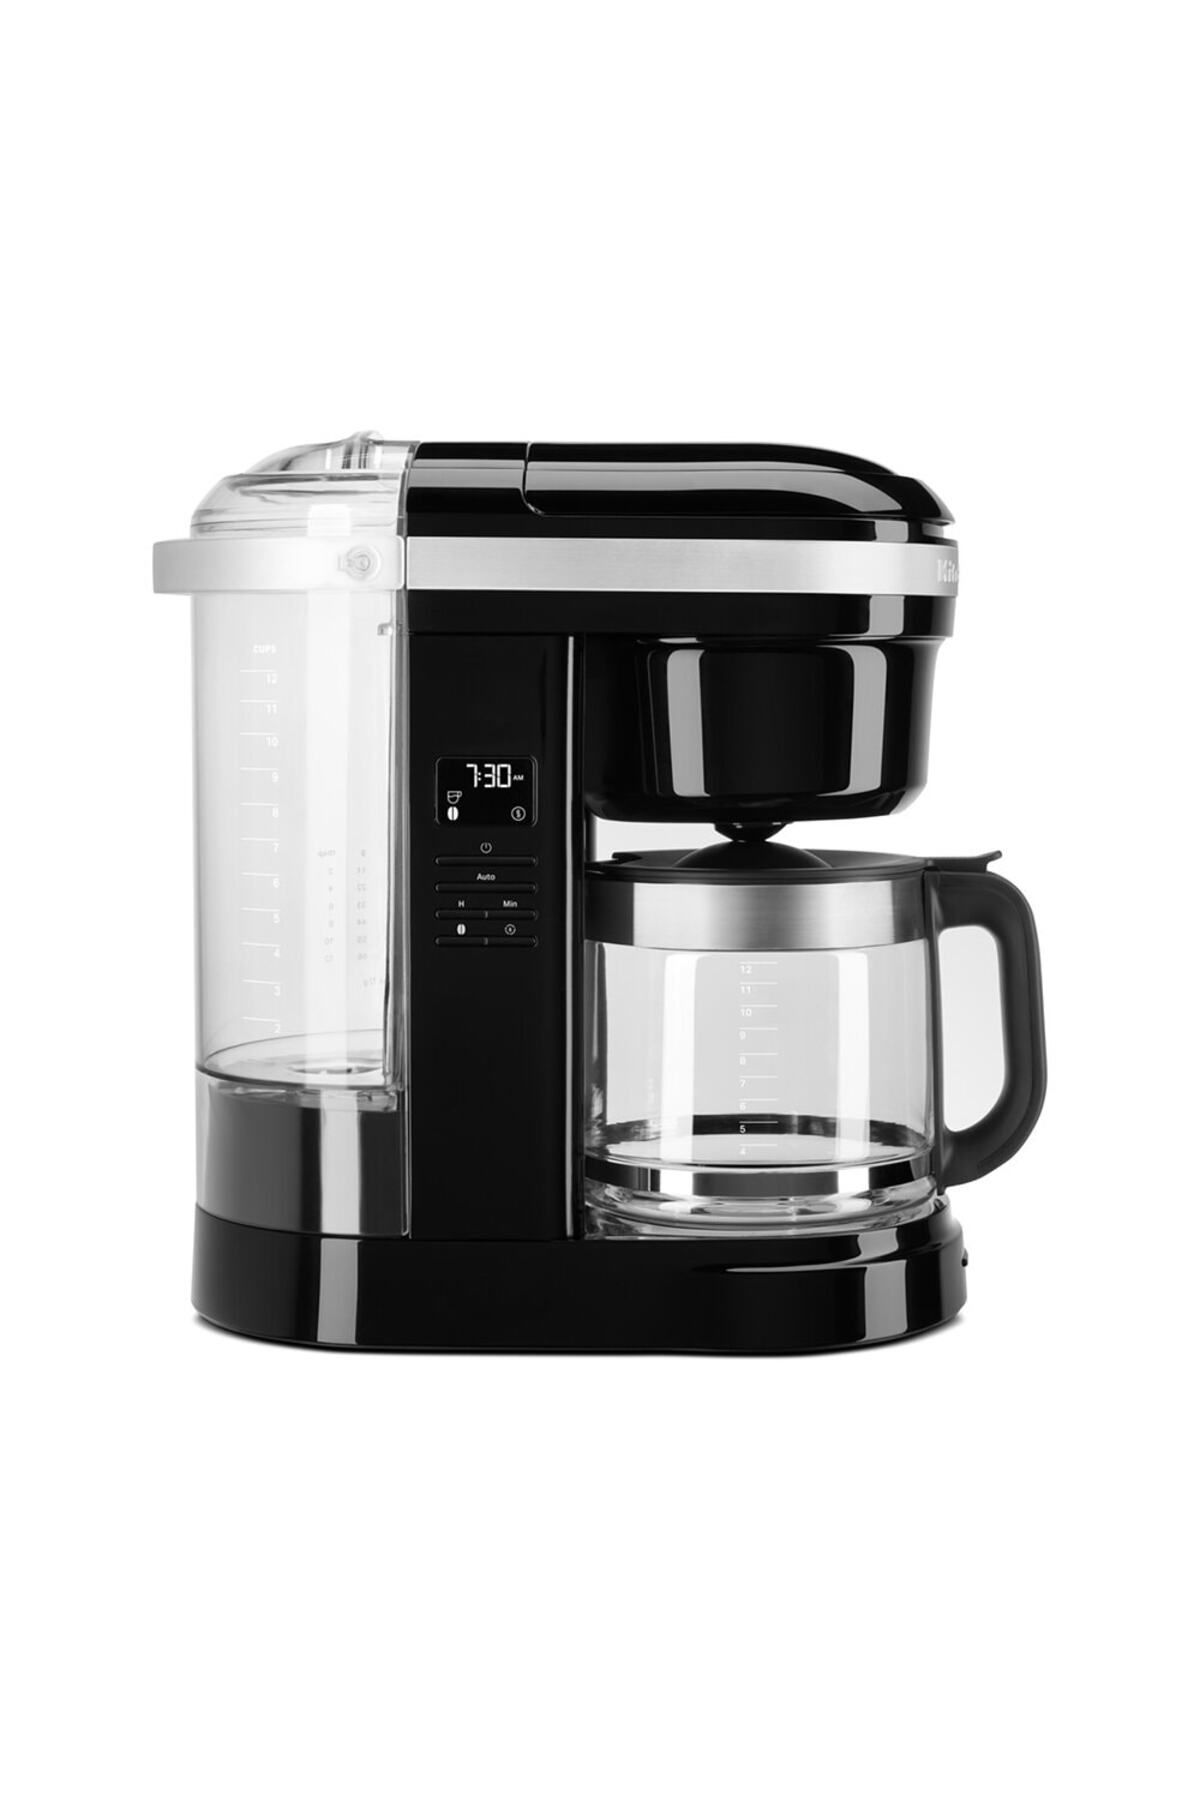 Kitchenaid 5kcm1208 Classic Filtre Kahve Makinesi Onyx Black